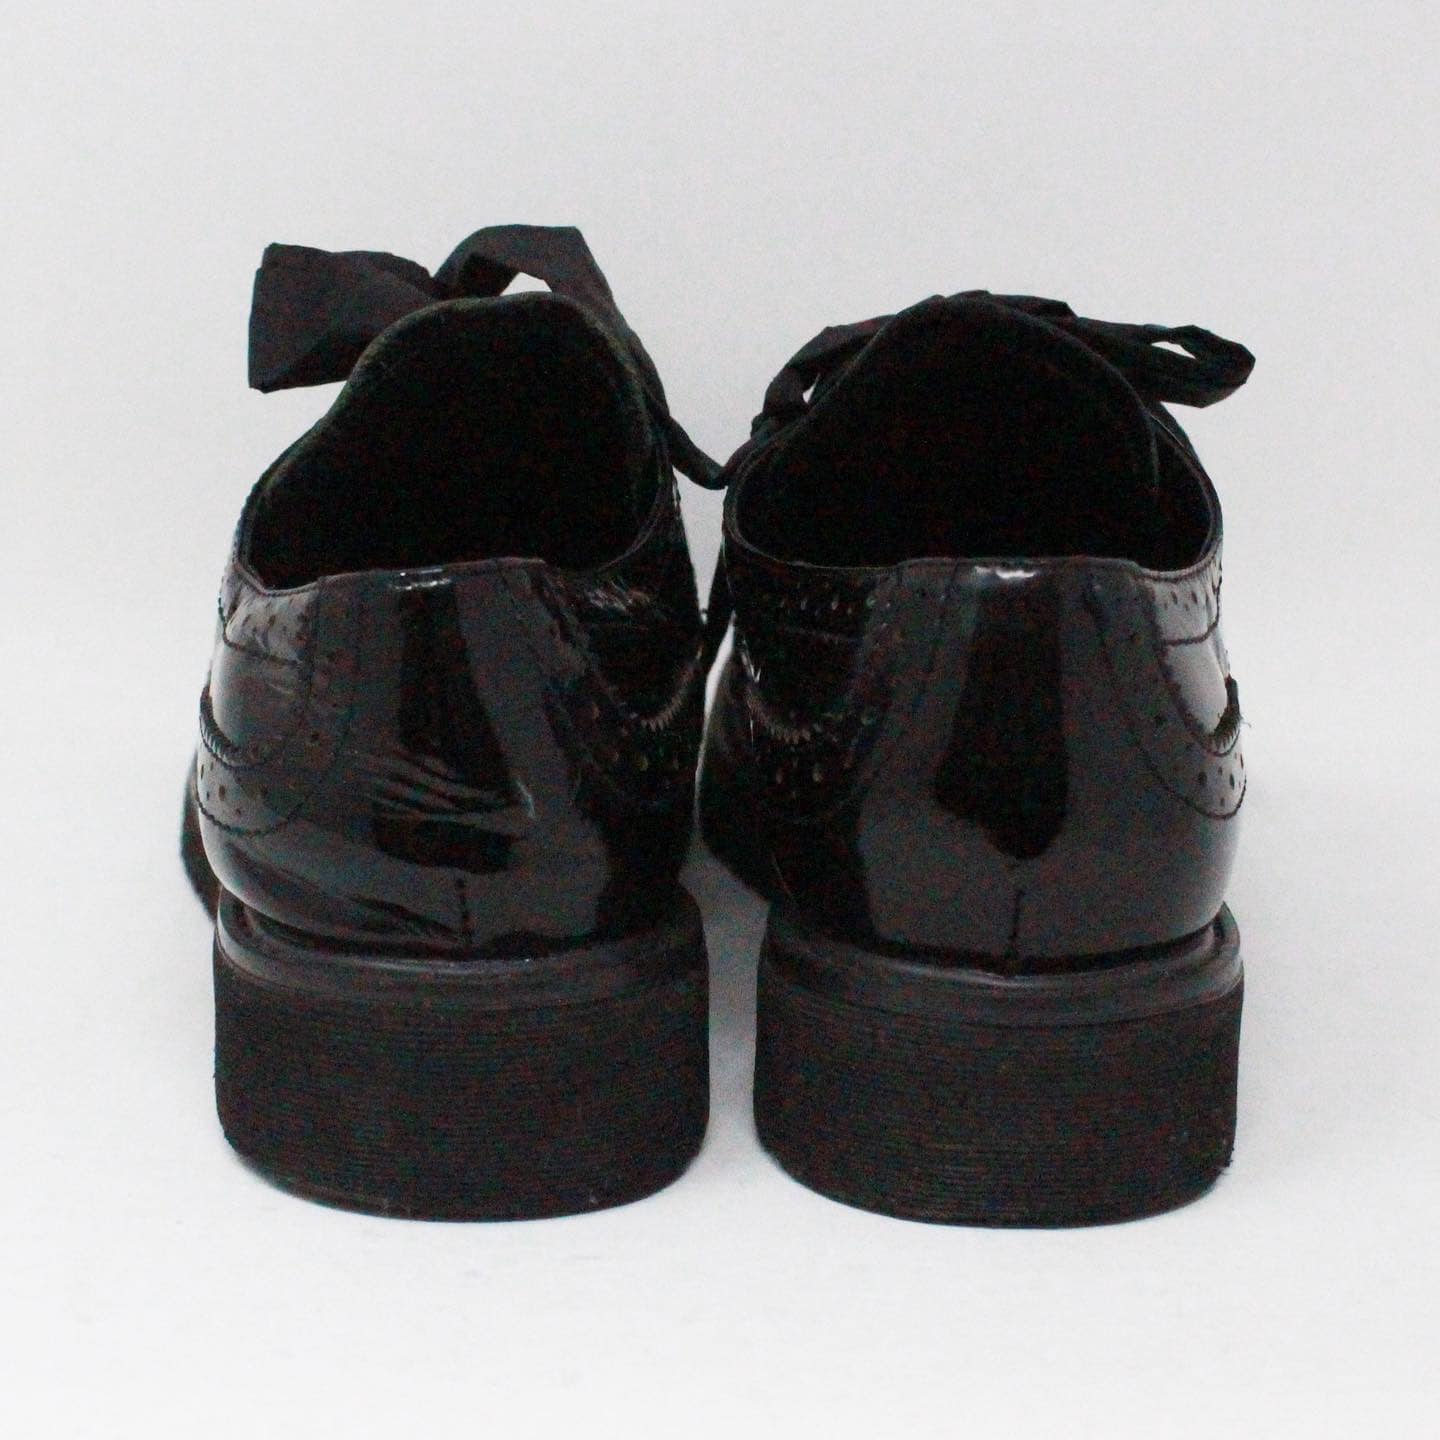 PRADA 38074 Black Patent Leather Shoes US 6 EU 36 d